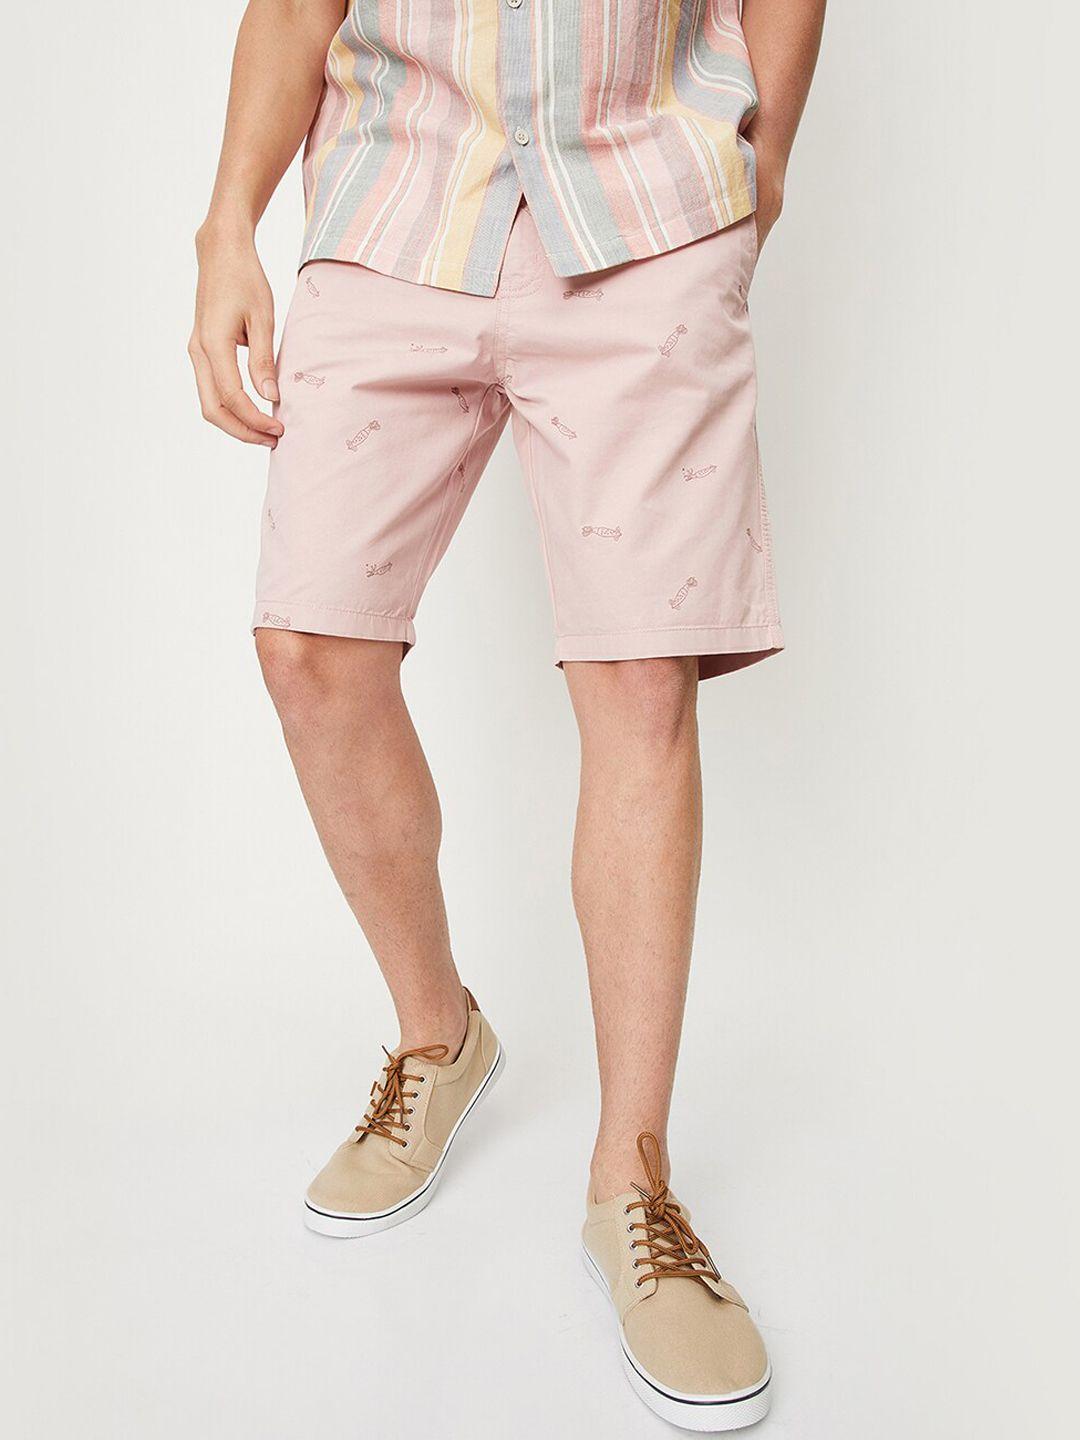 max-men-conversational-printed-pure-cotton-chino-shorts